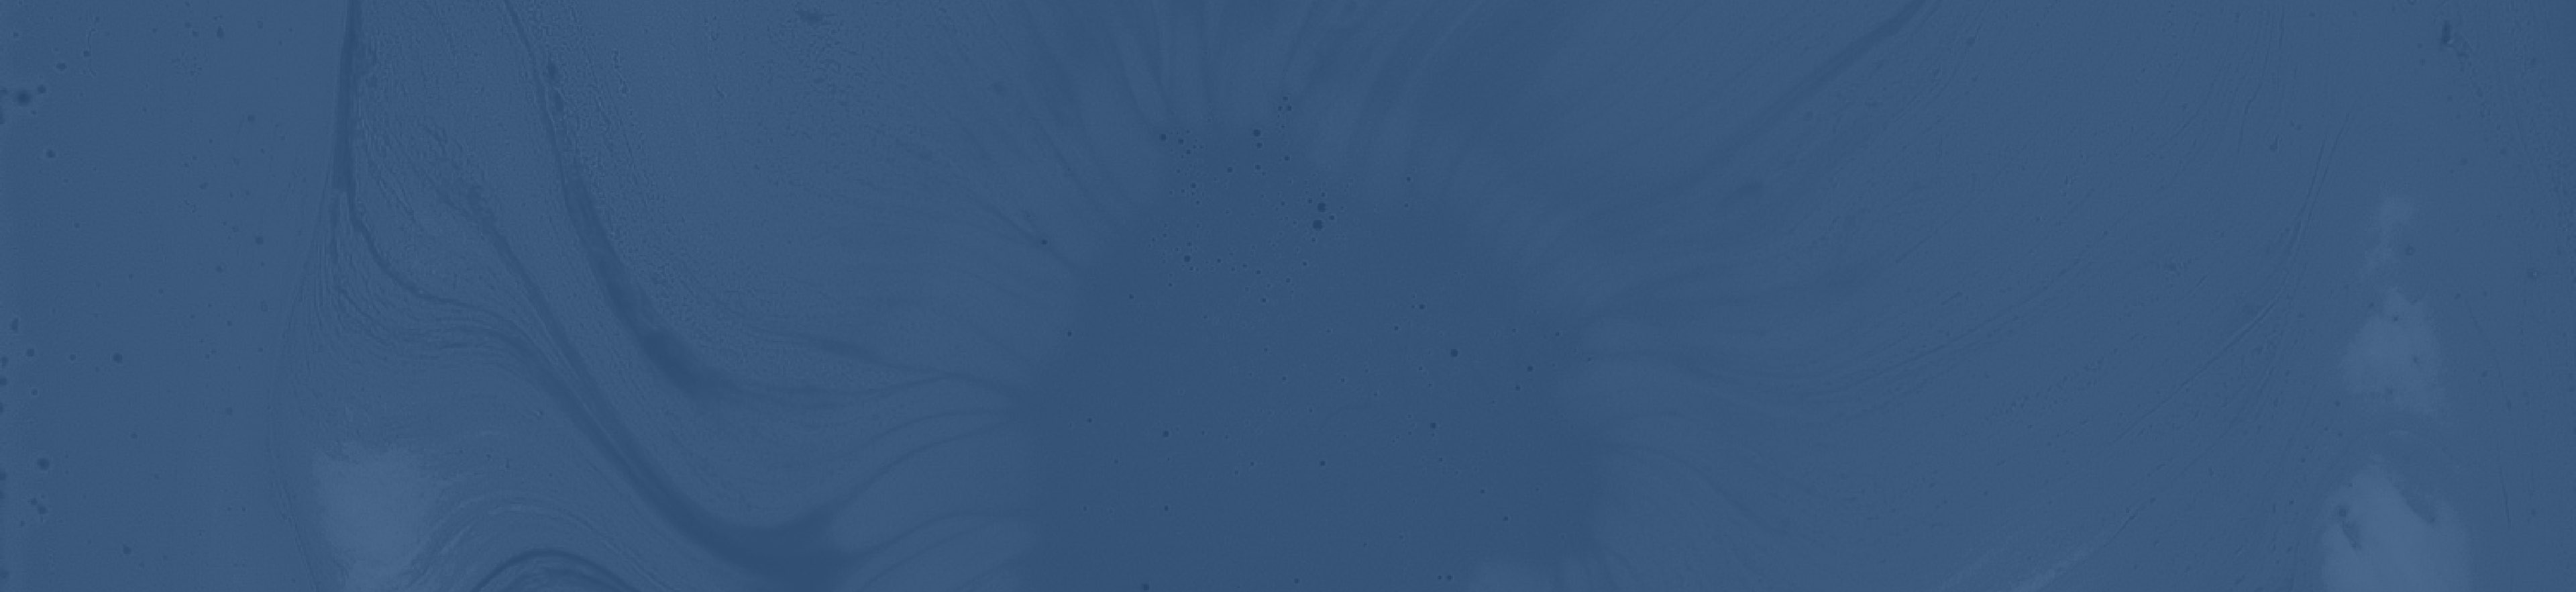 Abstract blue splatter image background